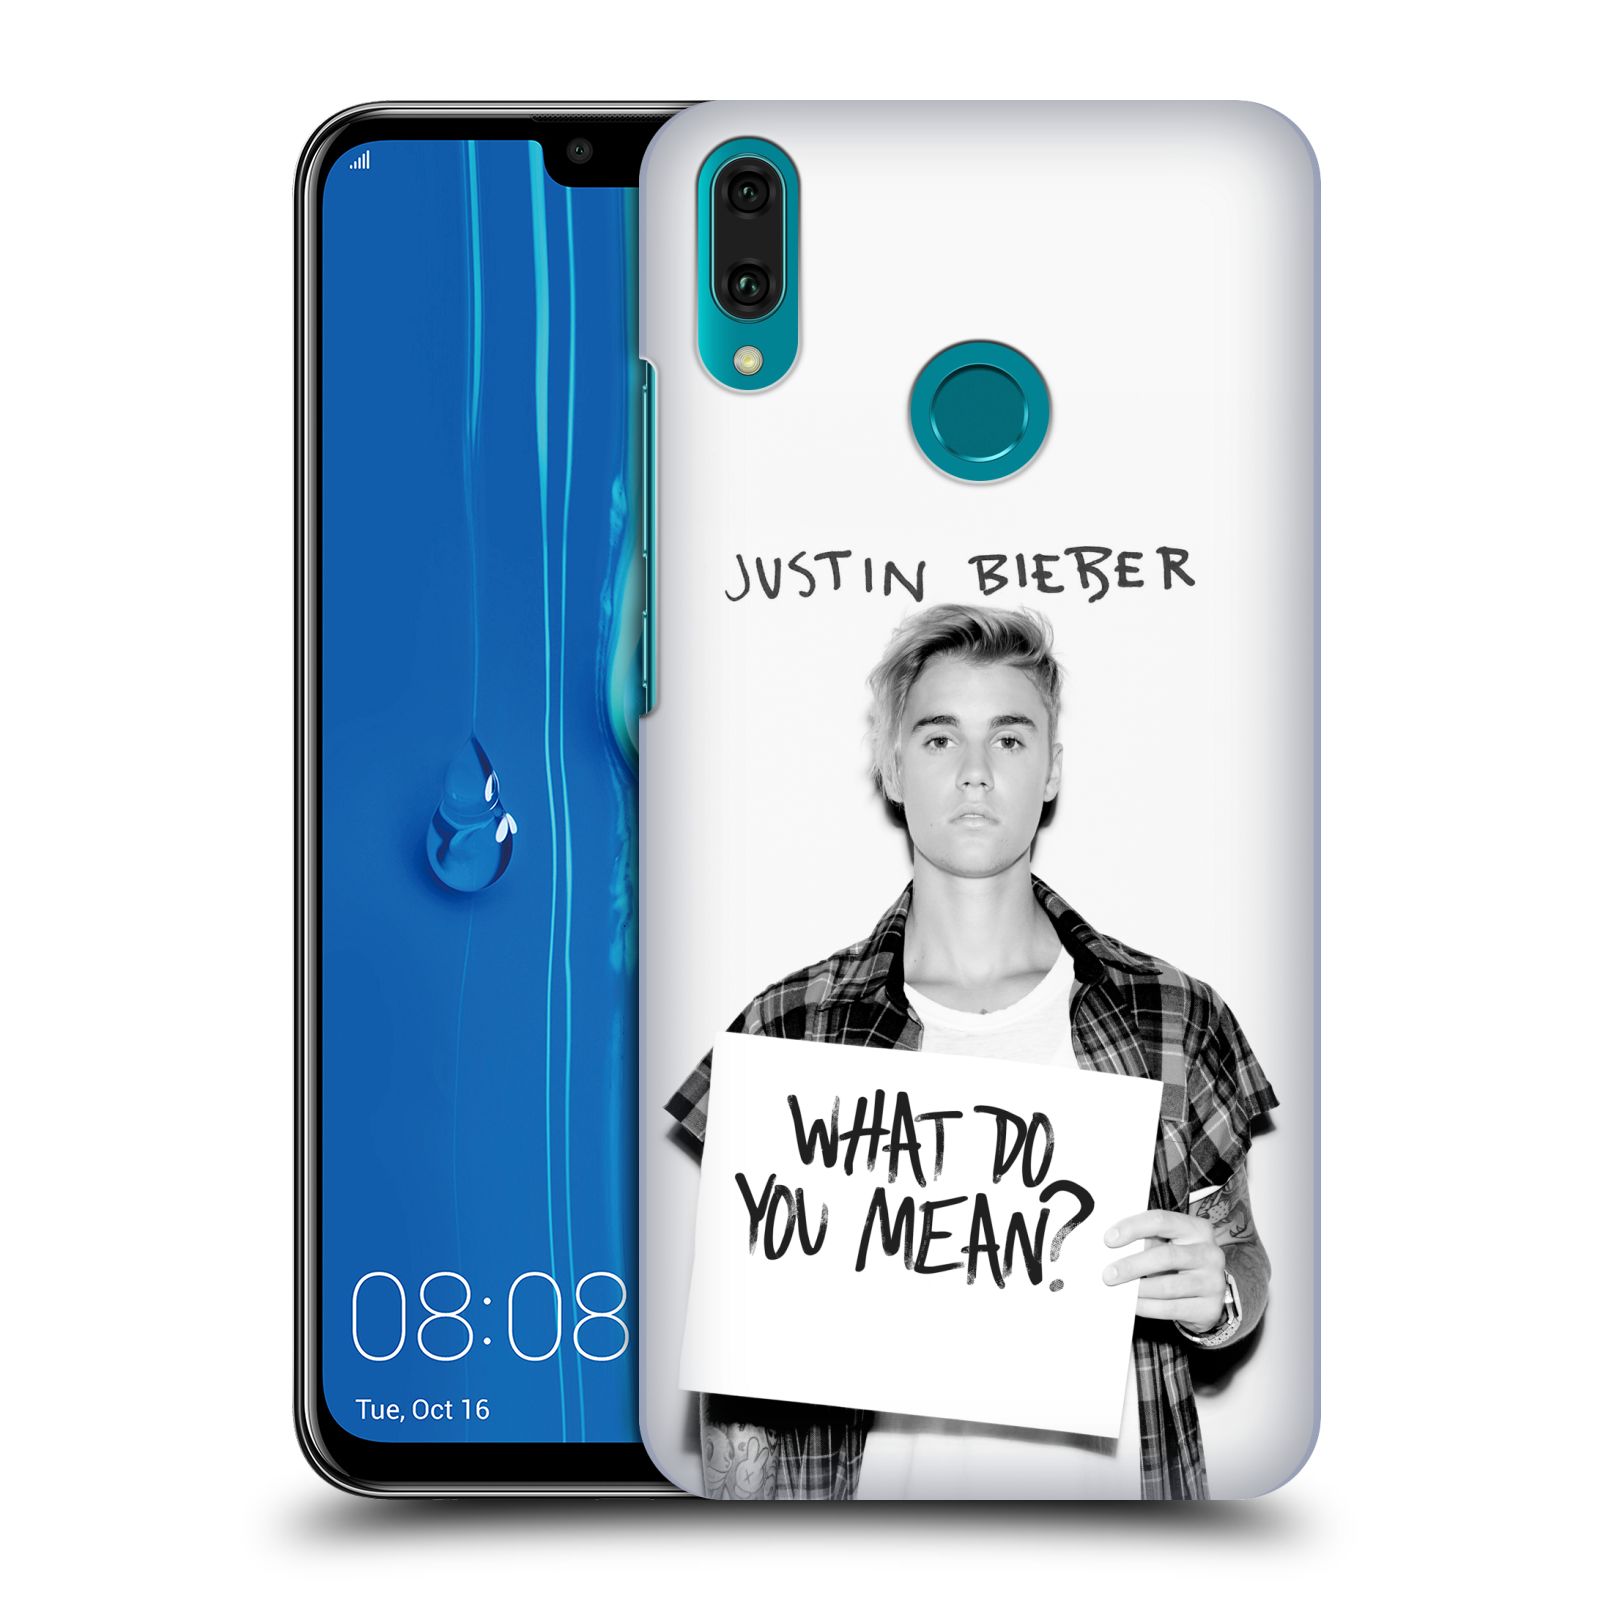 Pouzdro na mobil Huawei Y9 2019 - HEAD CASE - Justin Bieber foto Purpose What do you mean